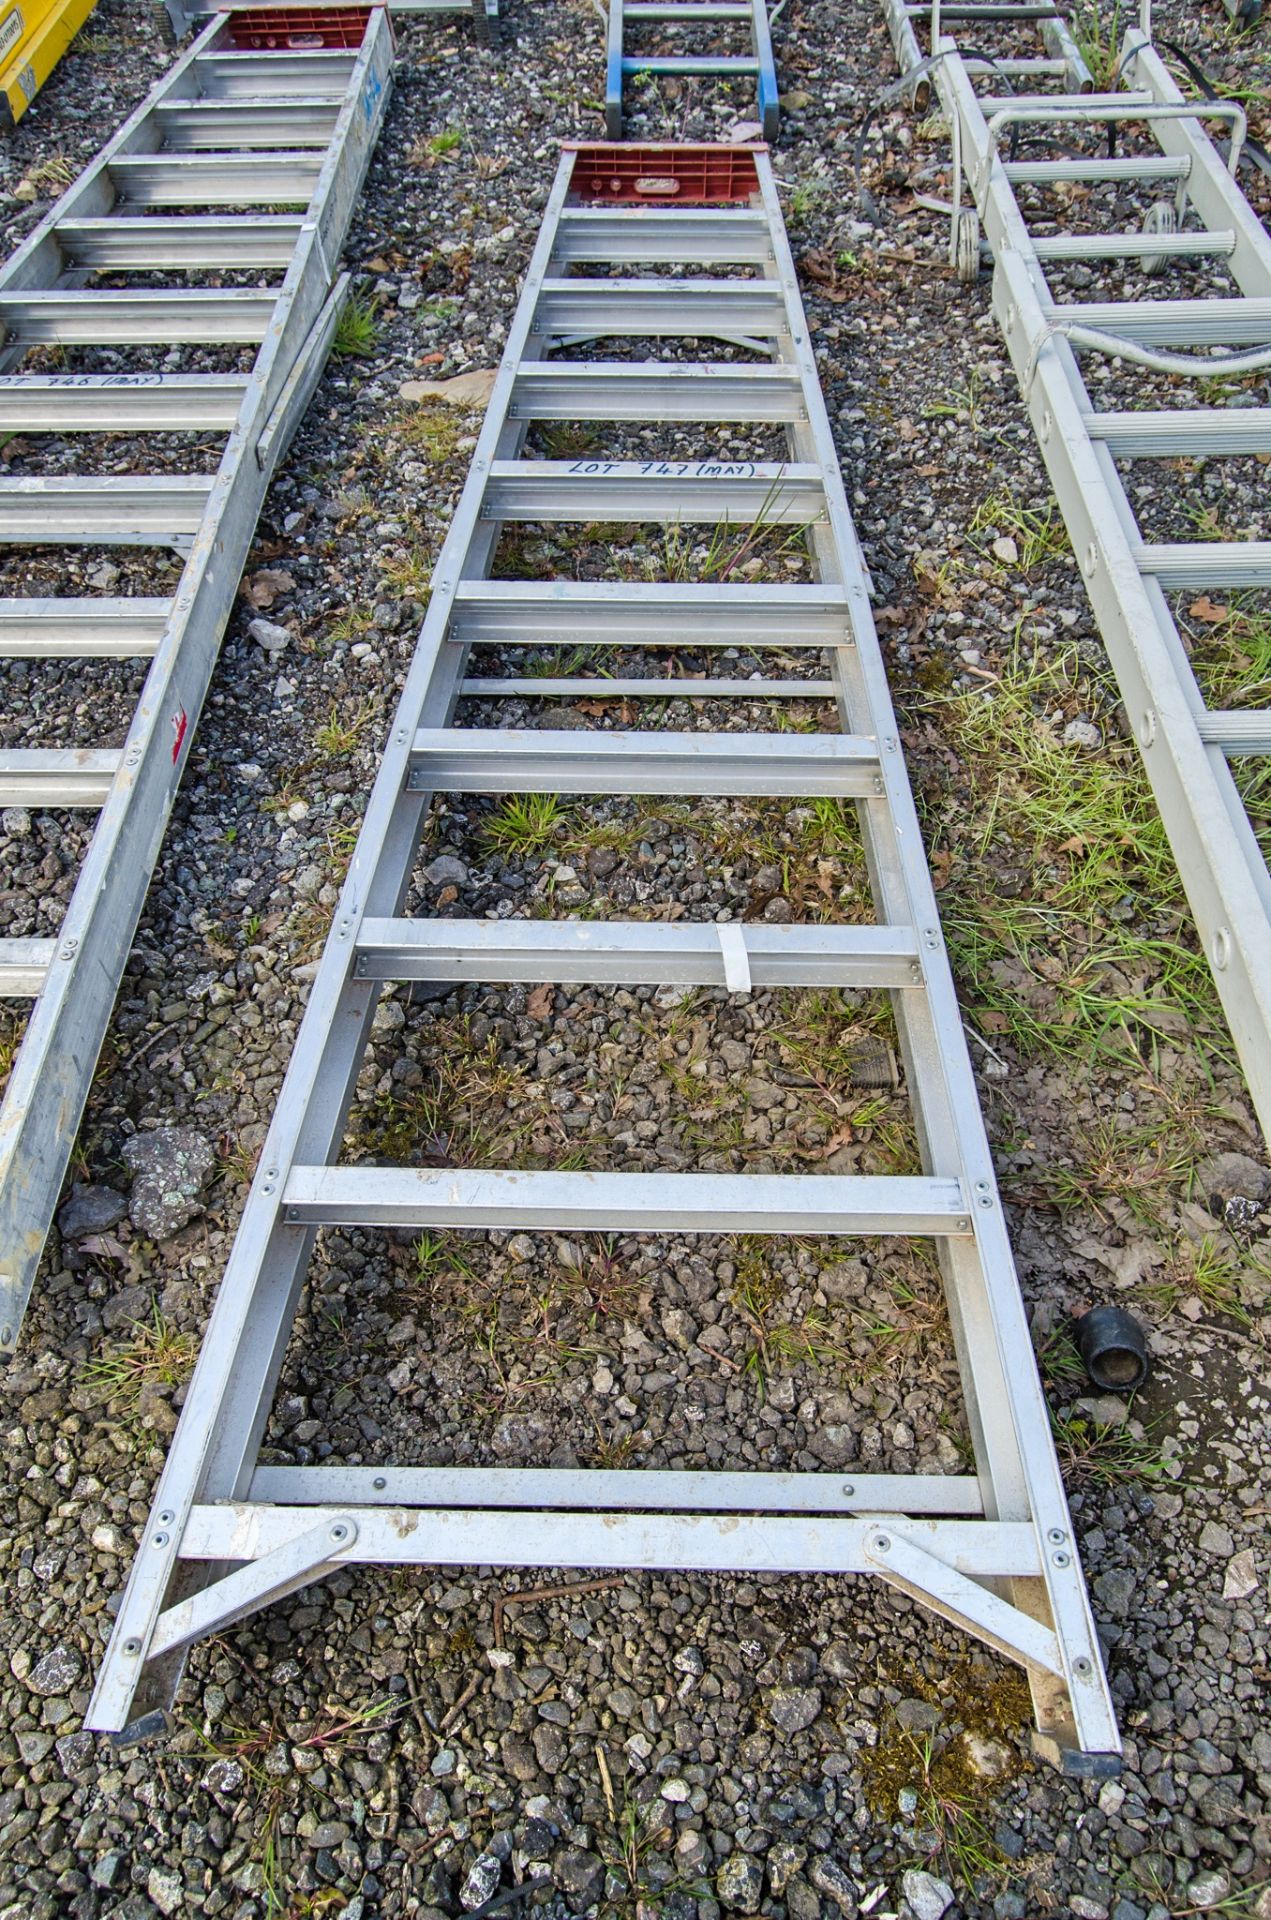 10 tread aluminium step ladder 1901LYT1711